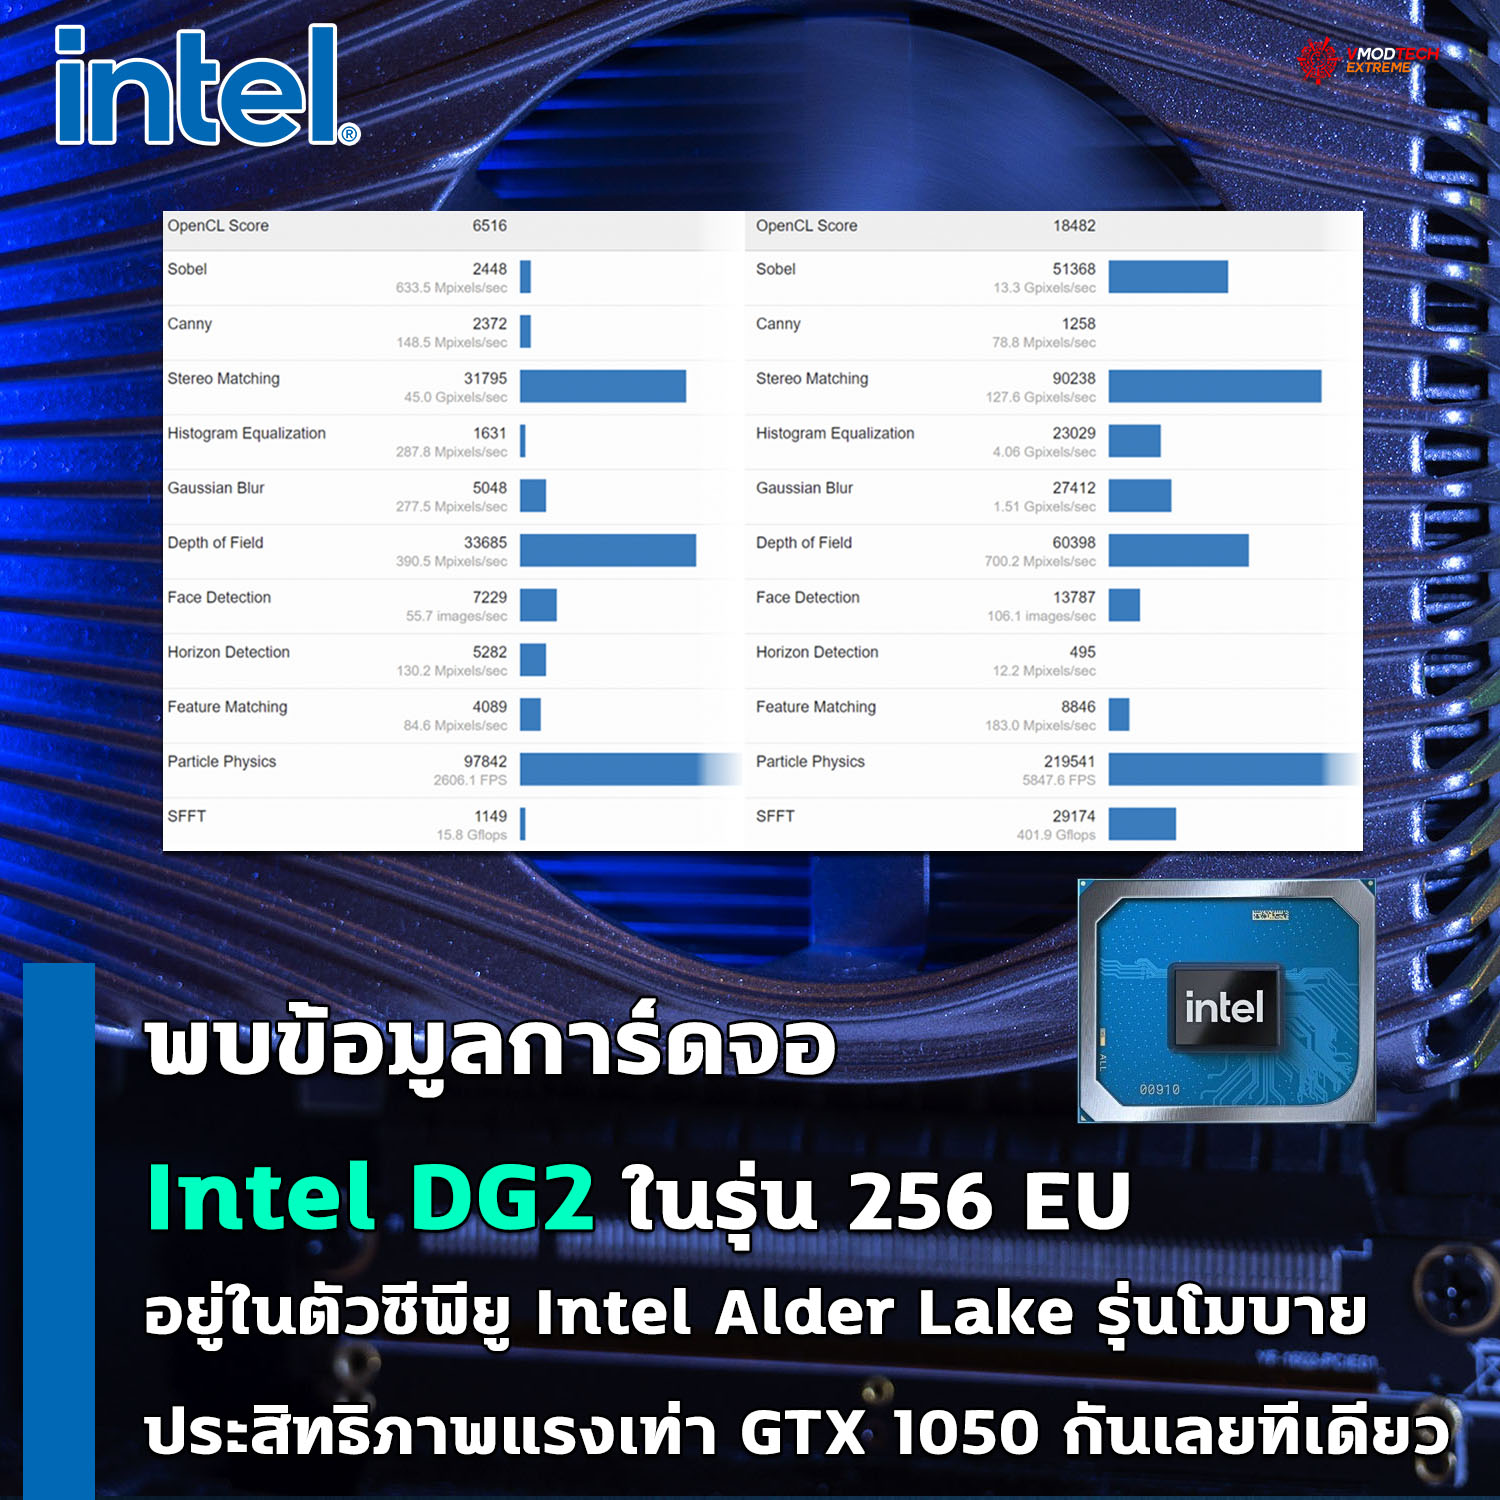 intel dg2 alder lake mobile พบข้อมูลการ์ดจอ Intel DG2 ในรุ่น 256 EU อยู่ในตัวซีพียู Intel Alder Lake ในรุ่นโมบาย 14คอร์ ประสิทธิภาพแรงเทียบเท่า GTX 1050 กันเลยทีเดียว 